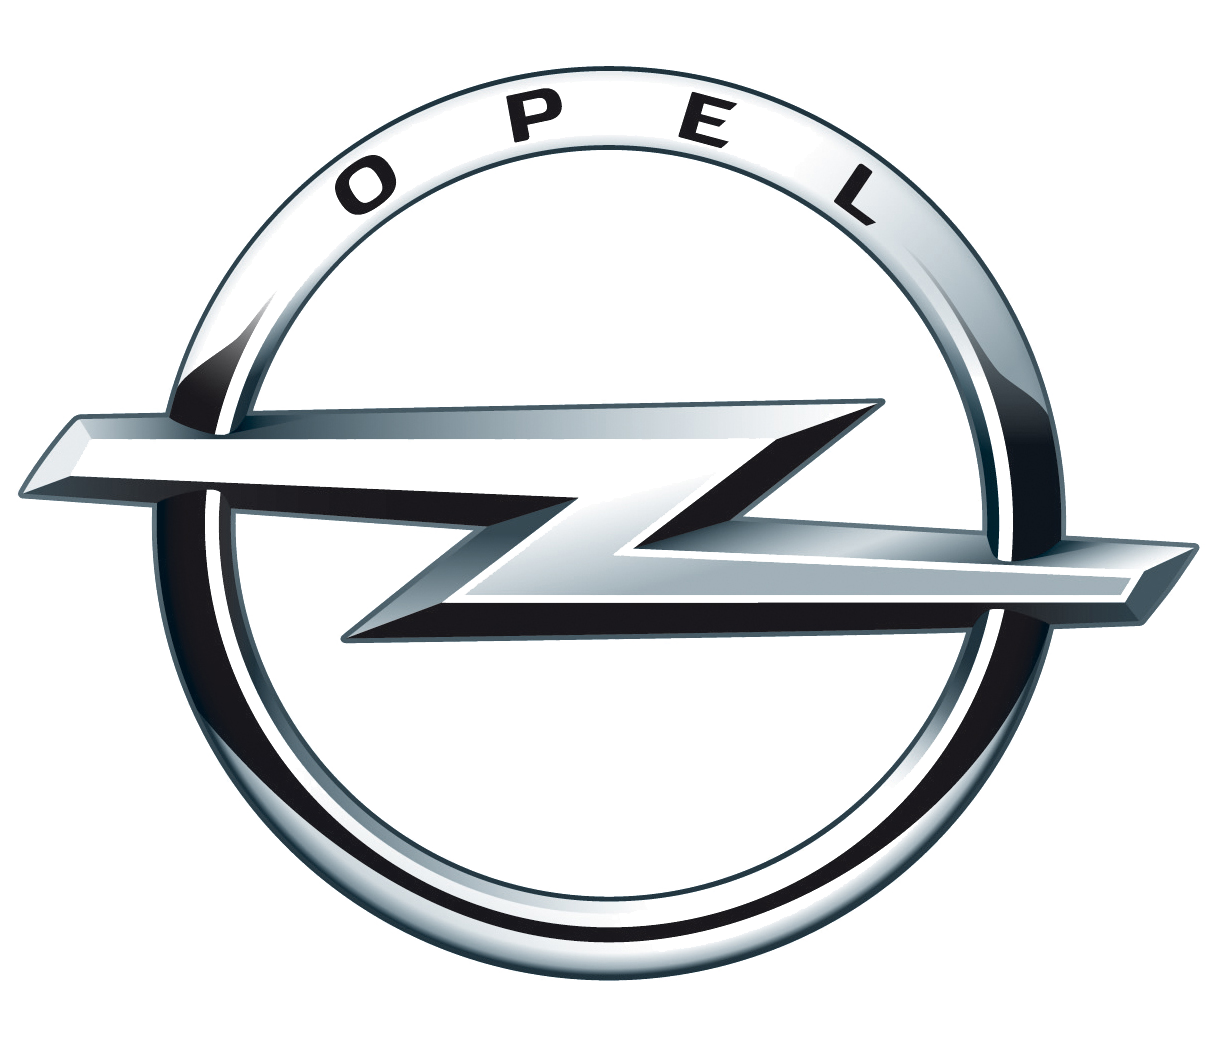 Opel Experimental: Το φως στο σκοτάδι (vid)